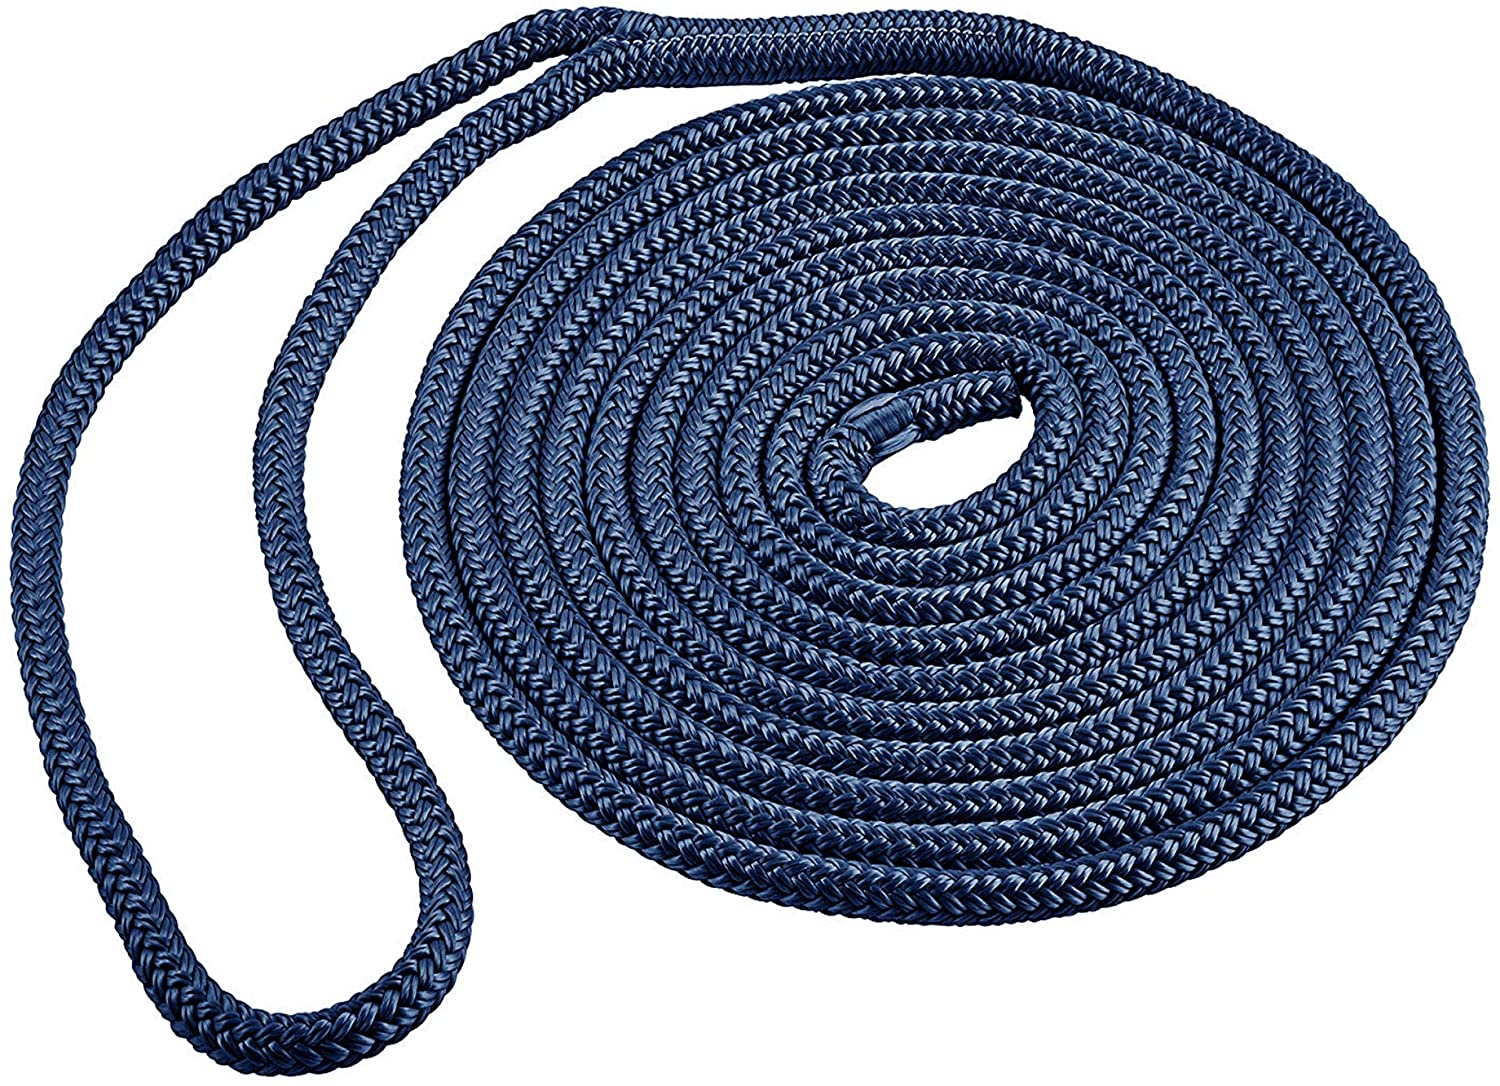 types of rope - nylon